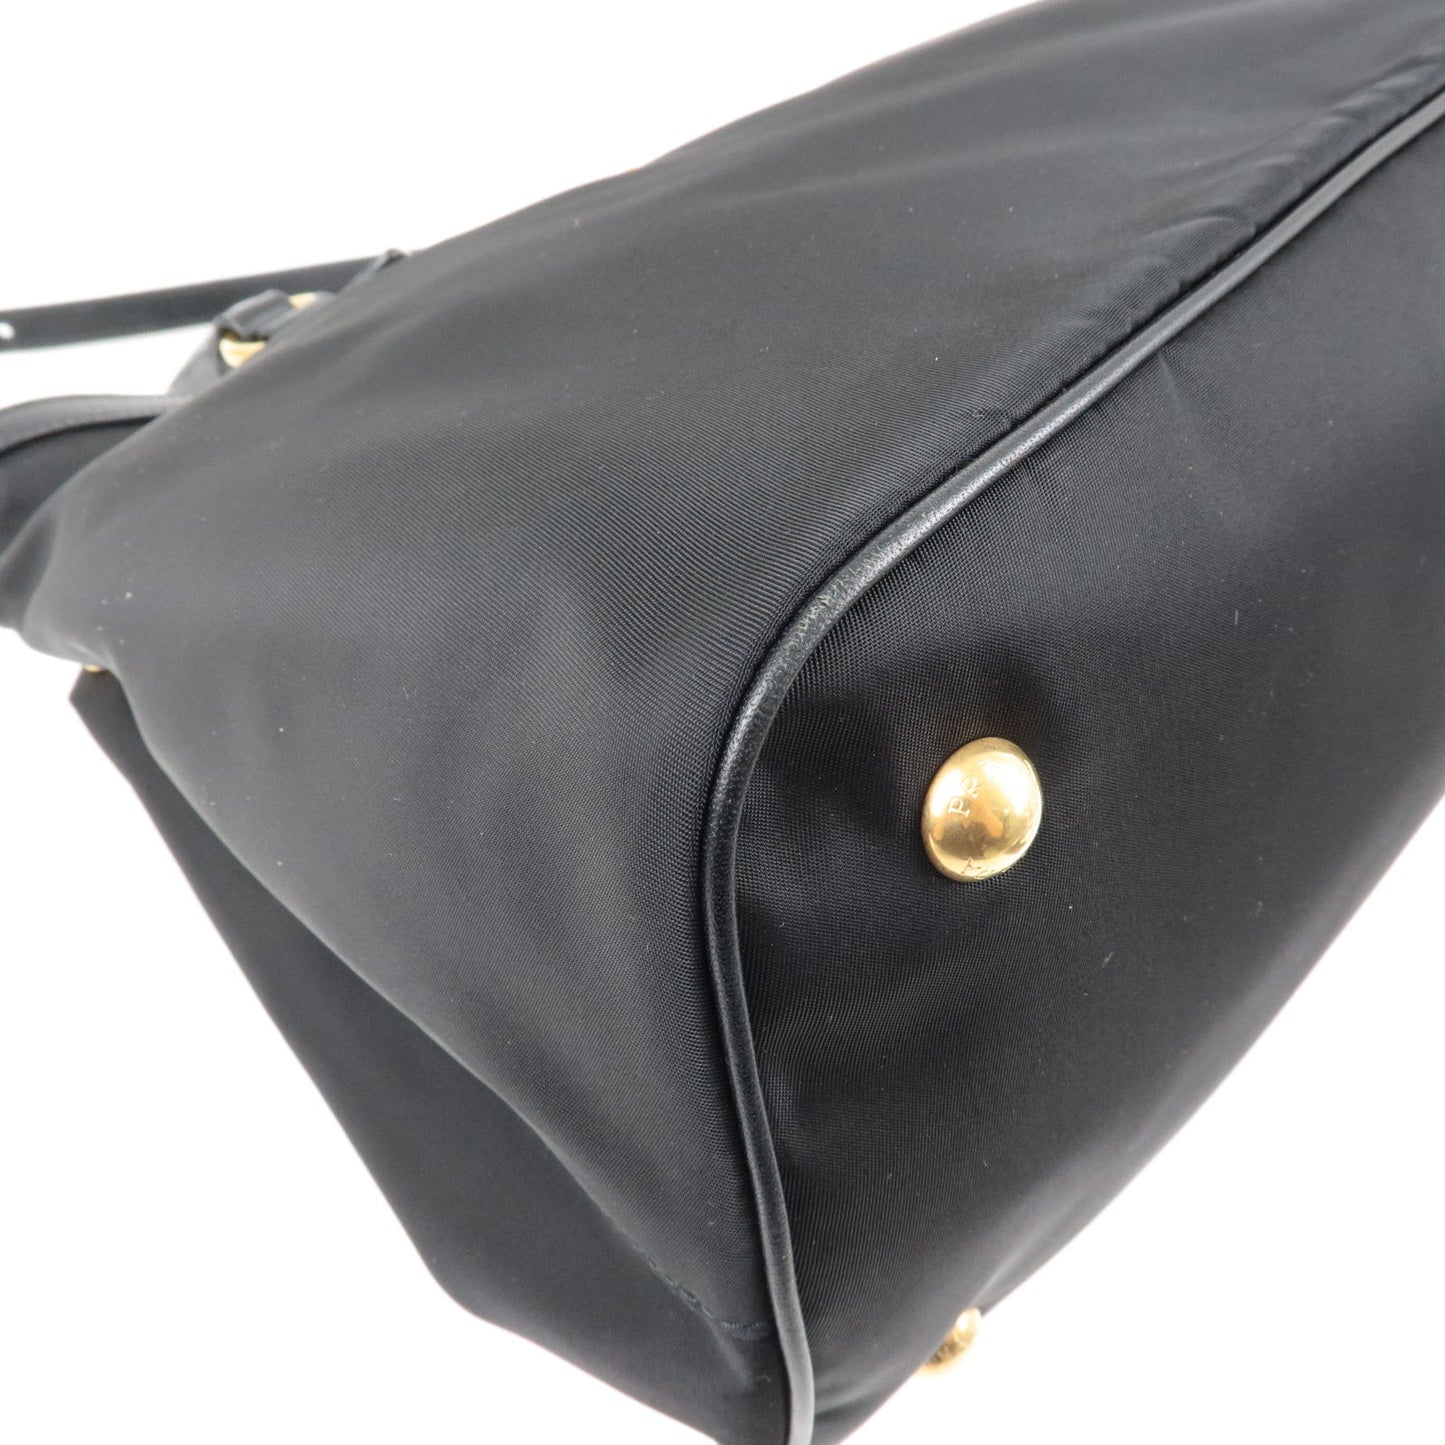 PRADA Logo Nylon Leather 2Way Bag Hand Bag NERO Black 1BA579